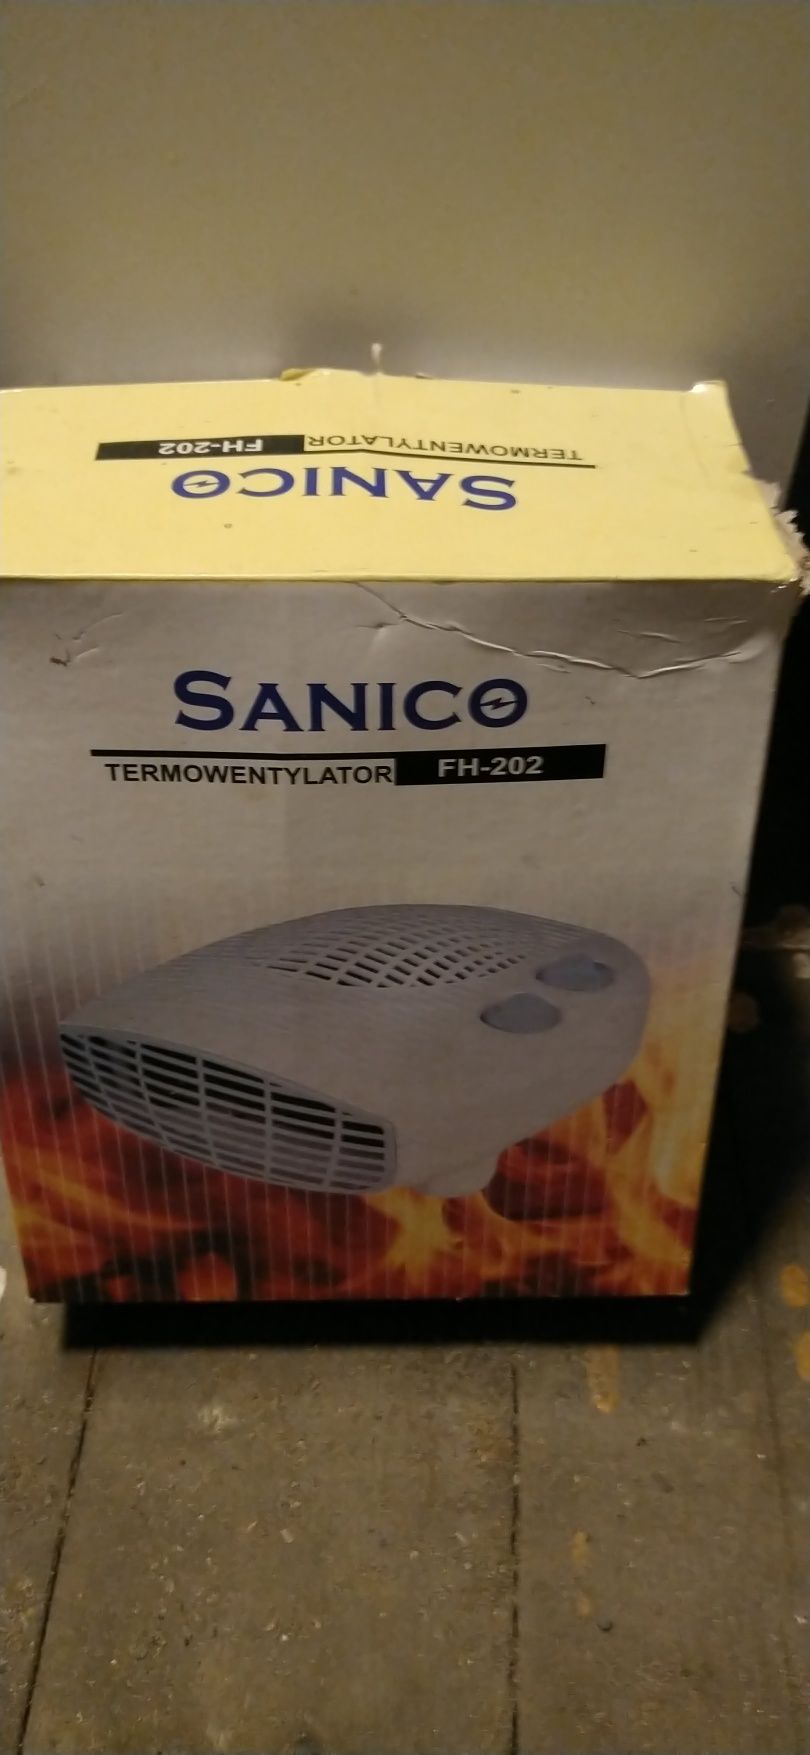 Termowentylator Sanico